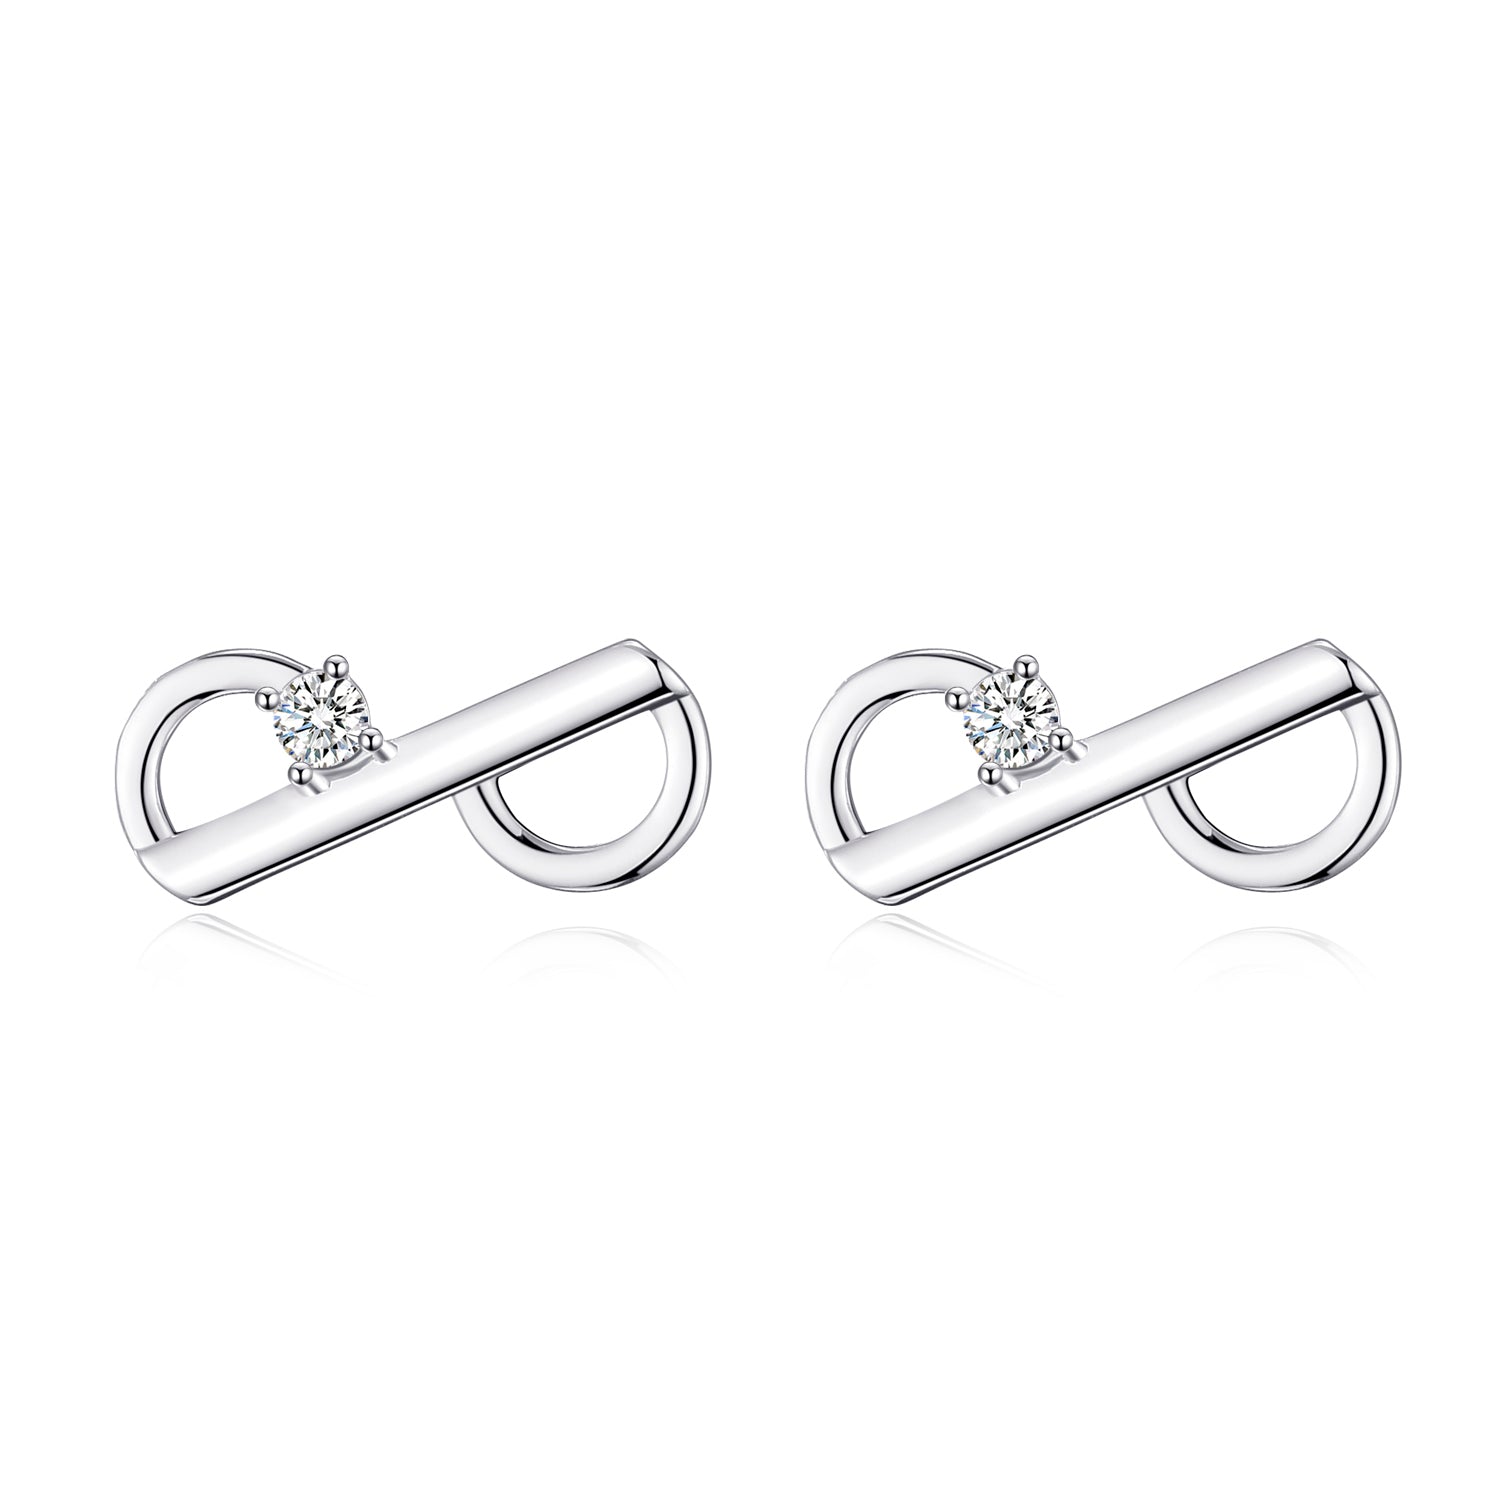 Philip Jones Signature Earrings Created with Zircondia® Crystals by Philip Jones Jewellery